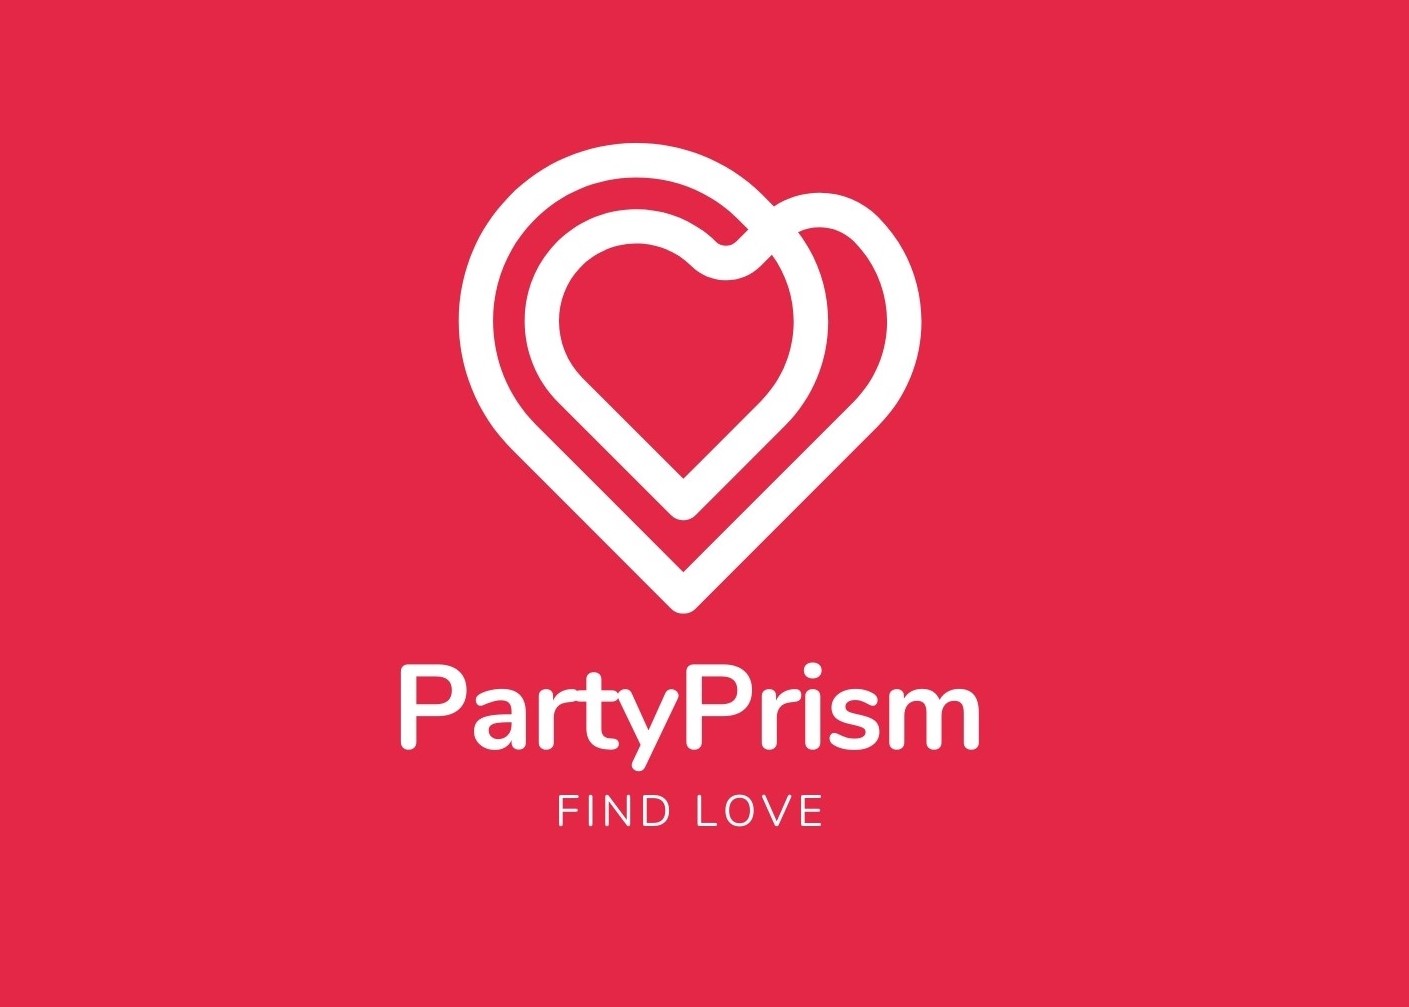 PartyPrism